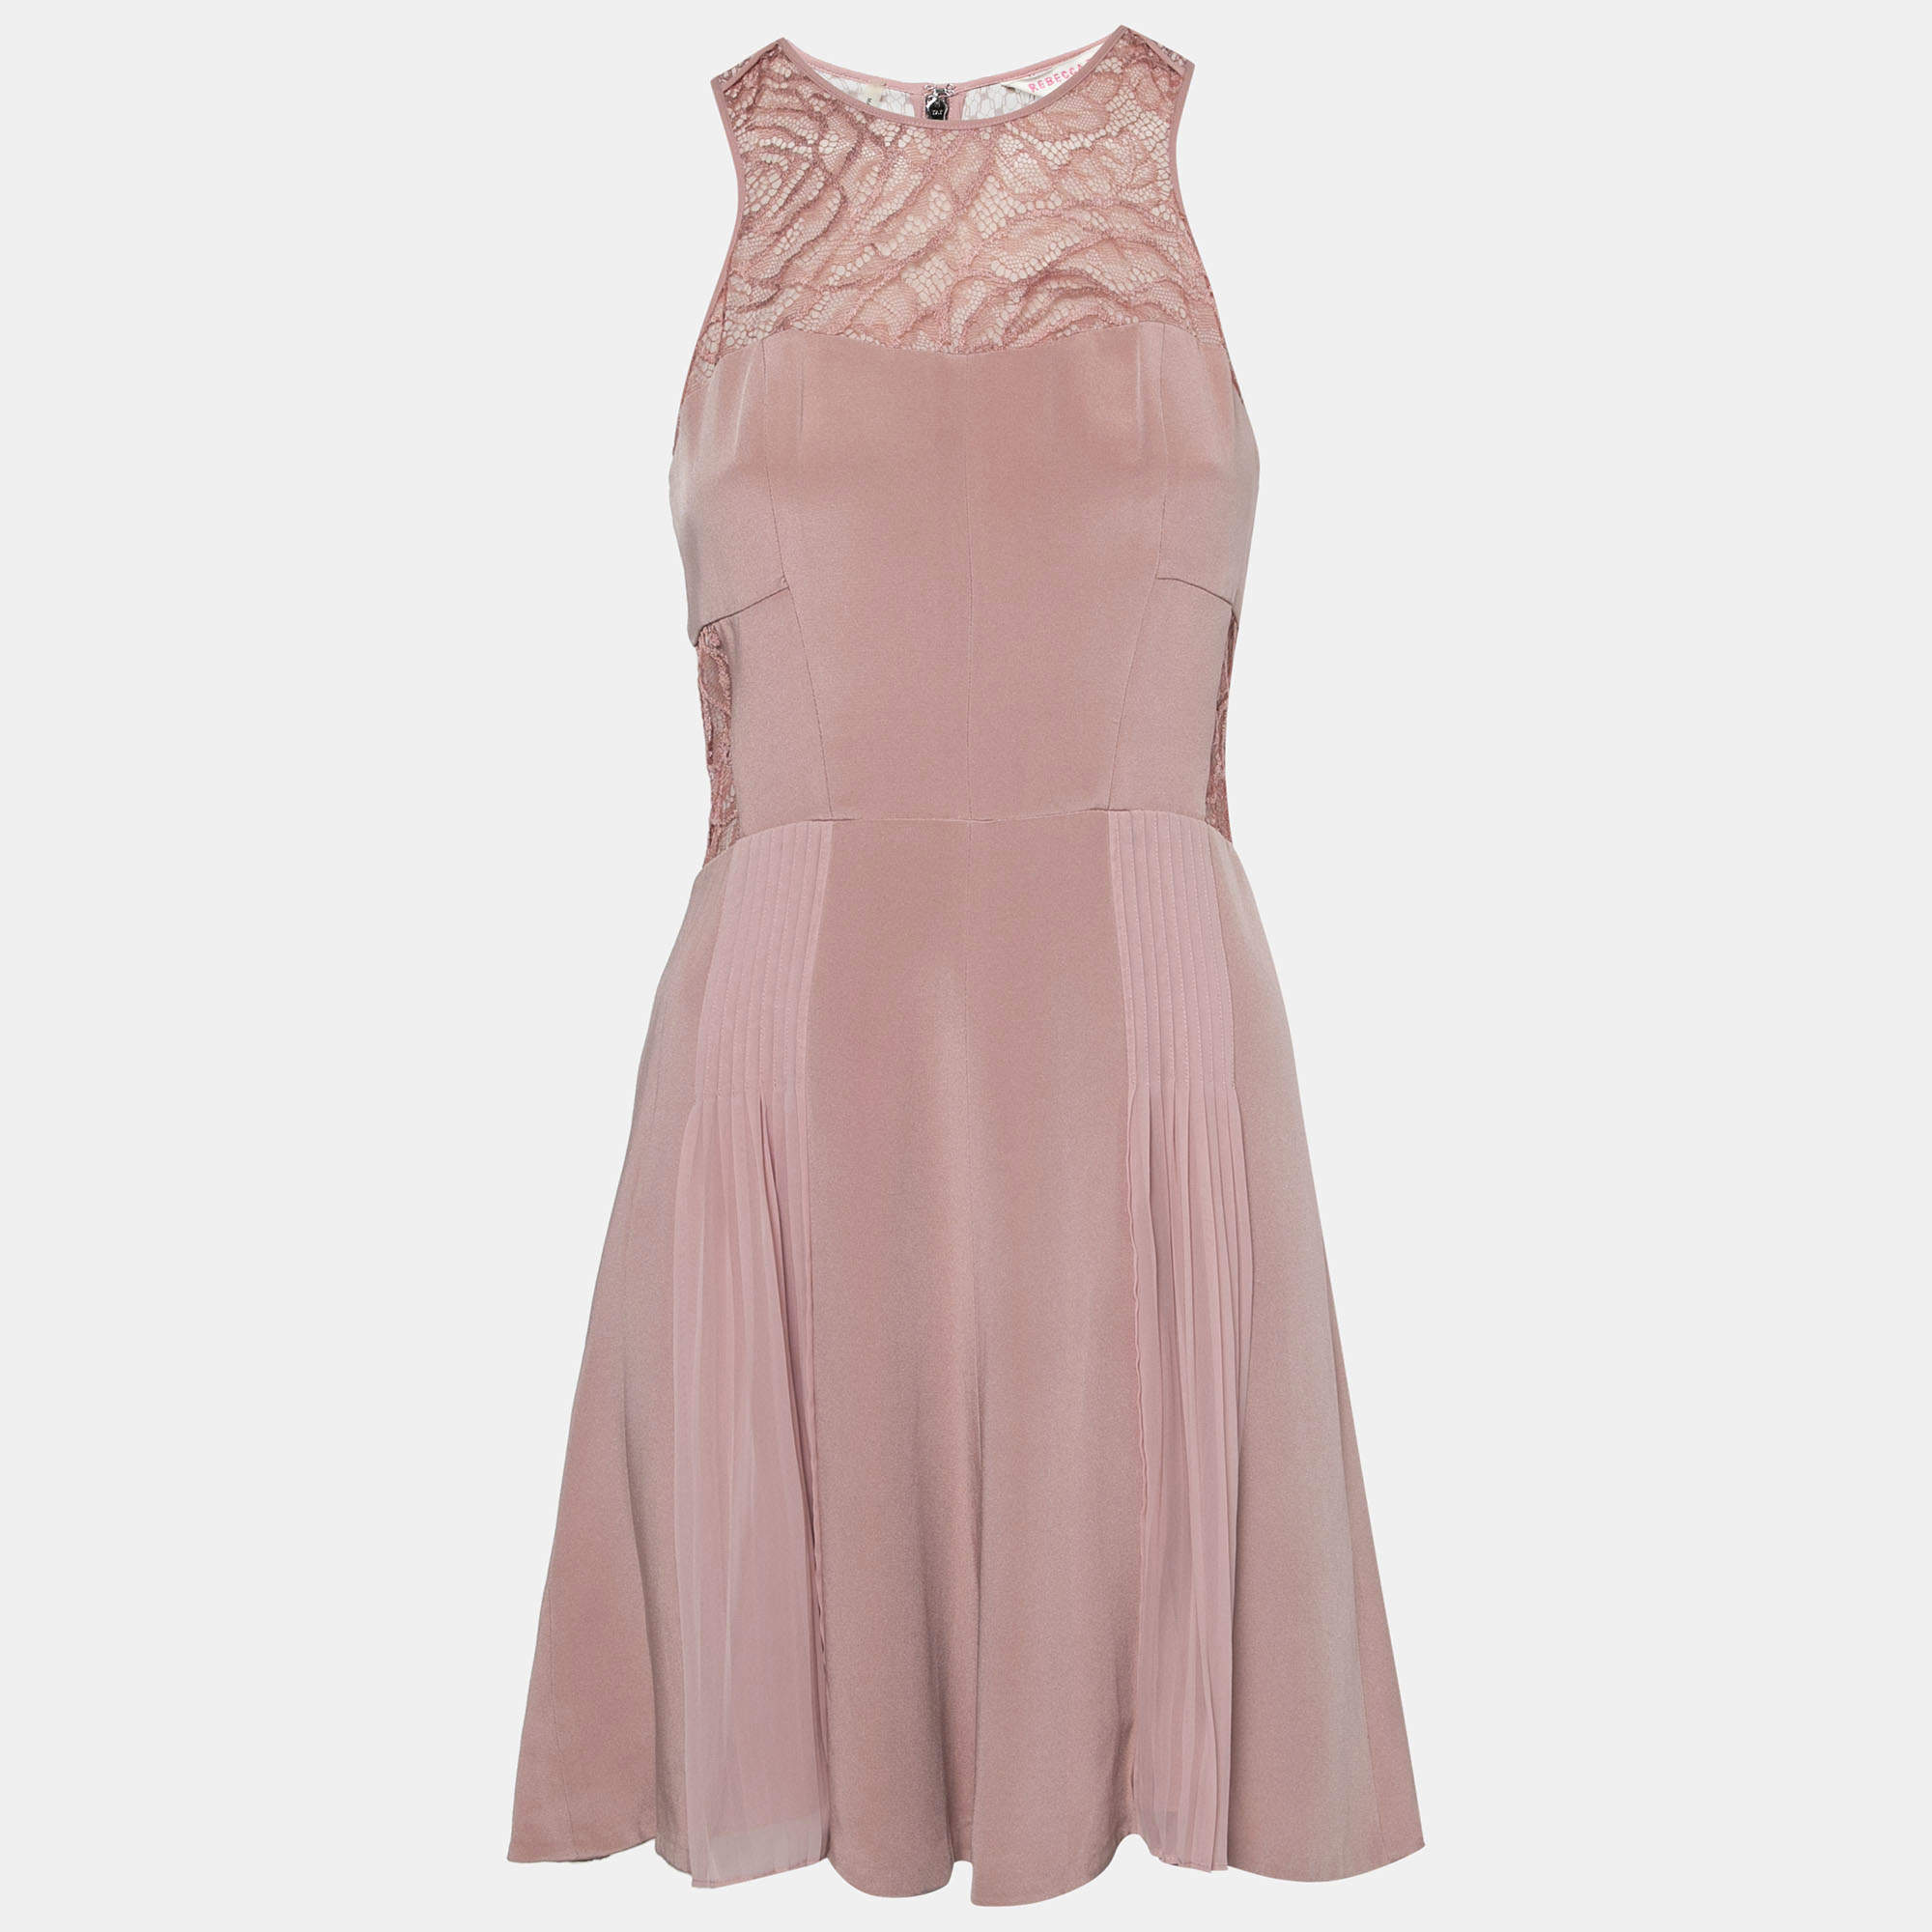 Rebecca Taylor Blush Pink Silk Lace Insert Pleated Cocktail Dress M